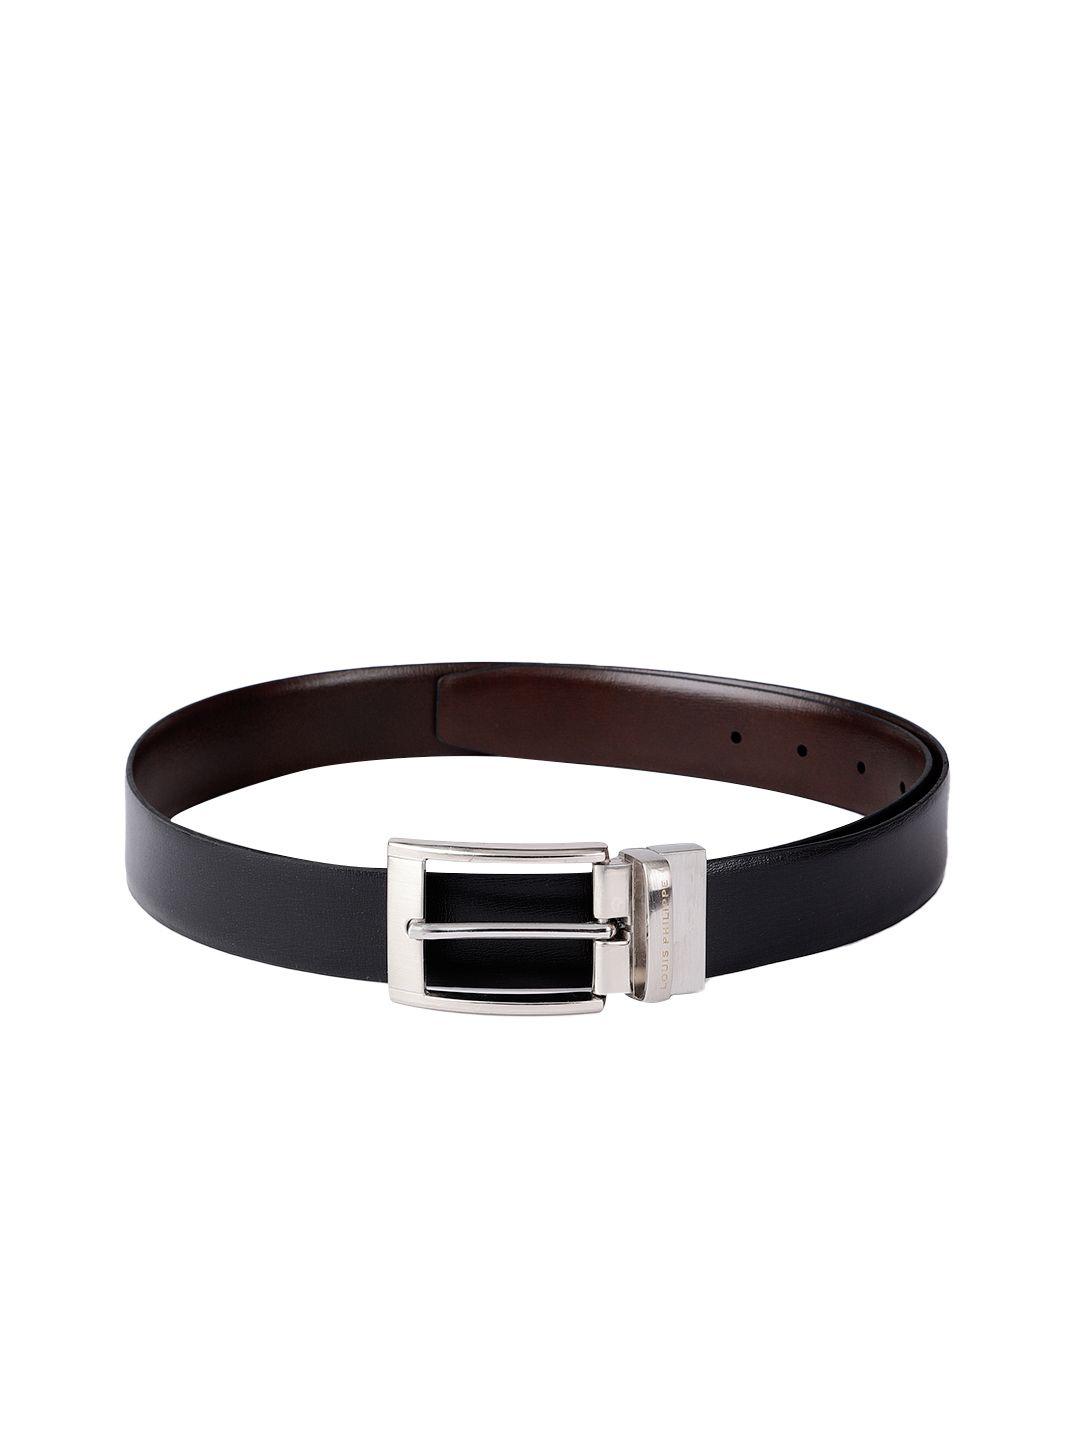 louis philippe men reversible leather formal belt